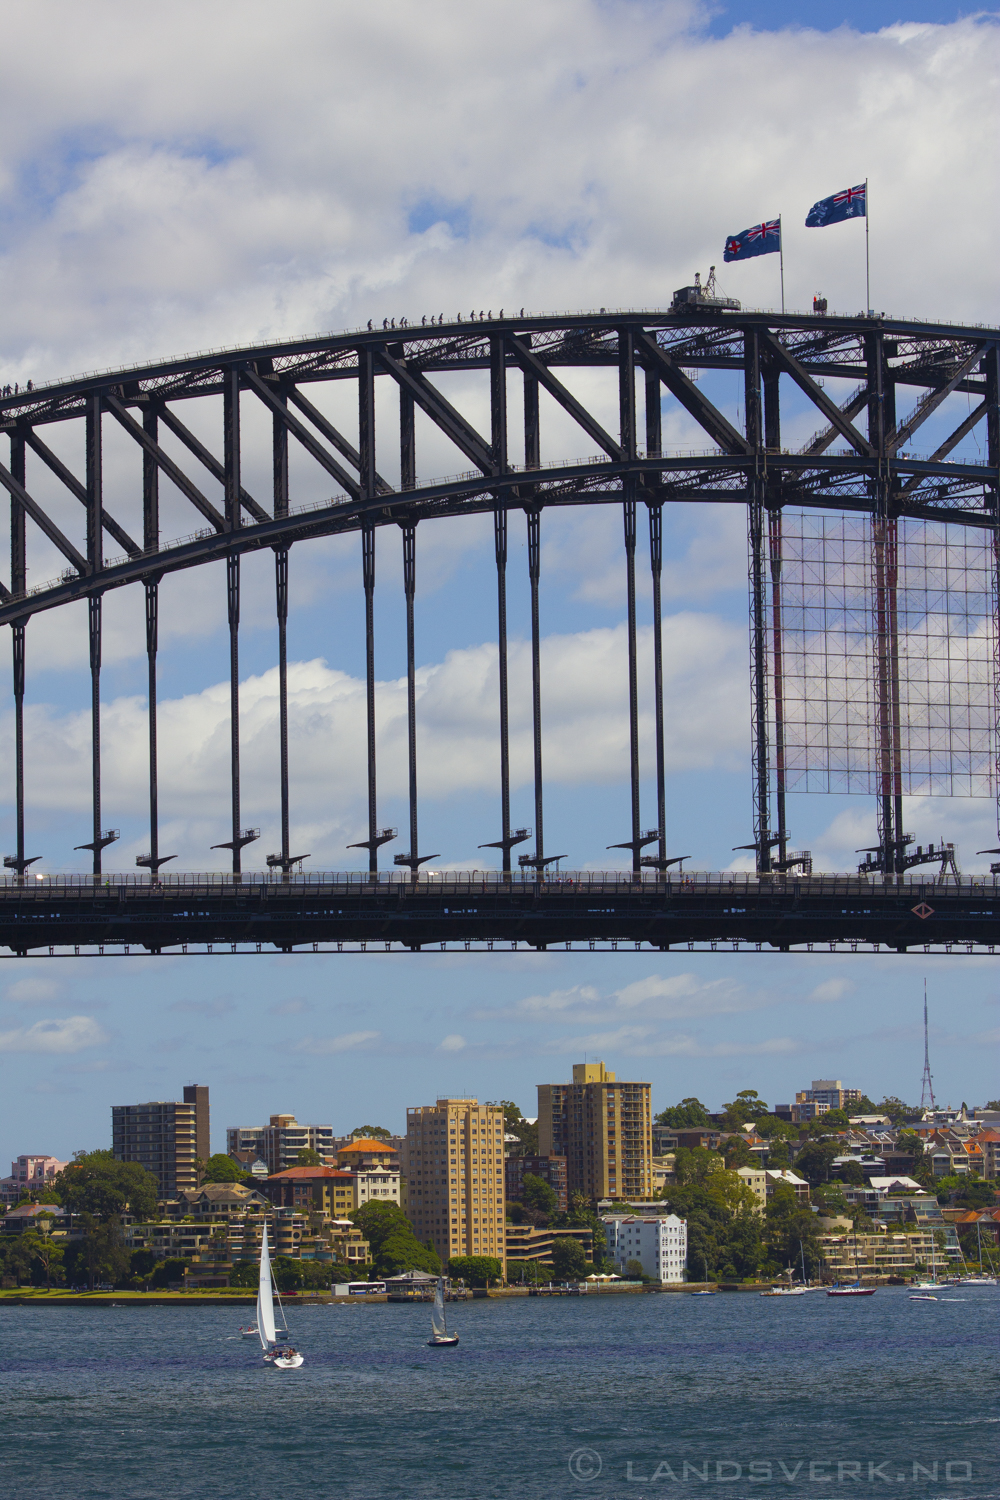 Sydney Bridge, New South Wales. 

(Canon EOS 550D / Sigma 70-200mm F2.8 OS)